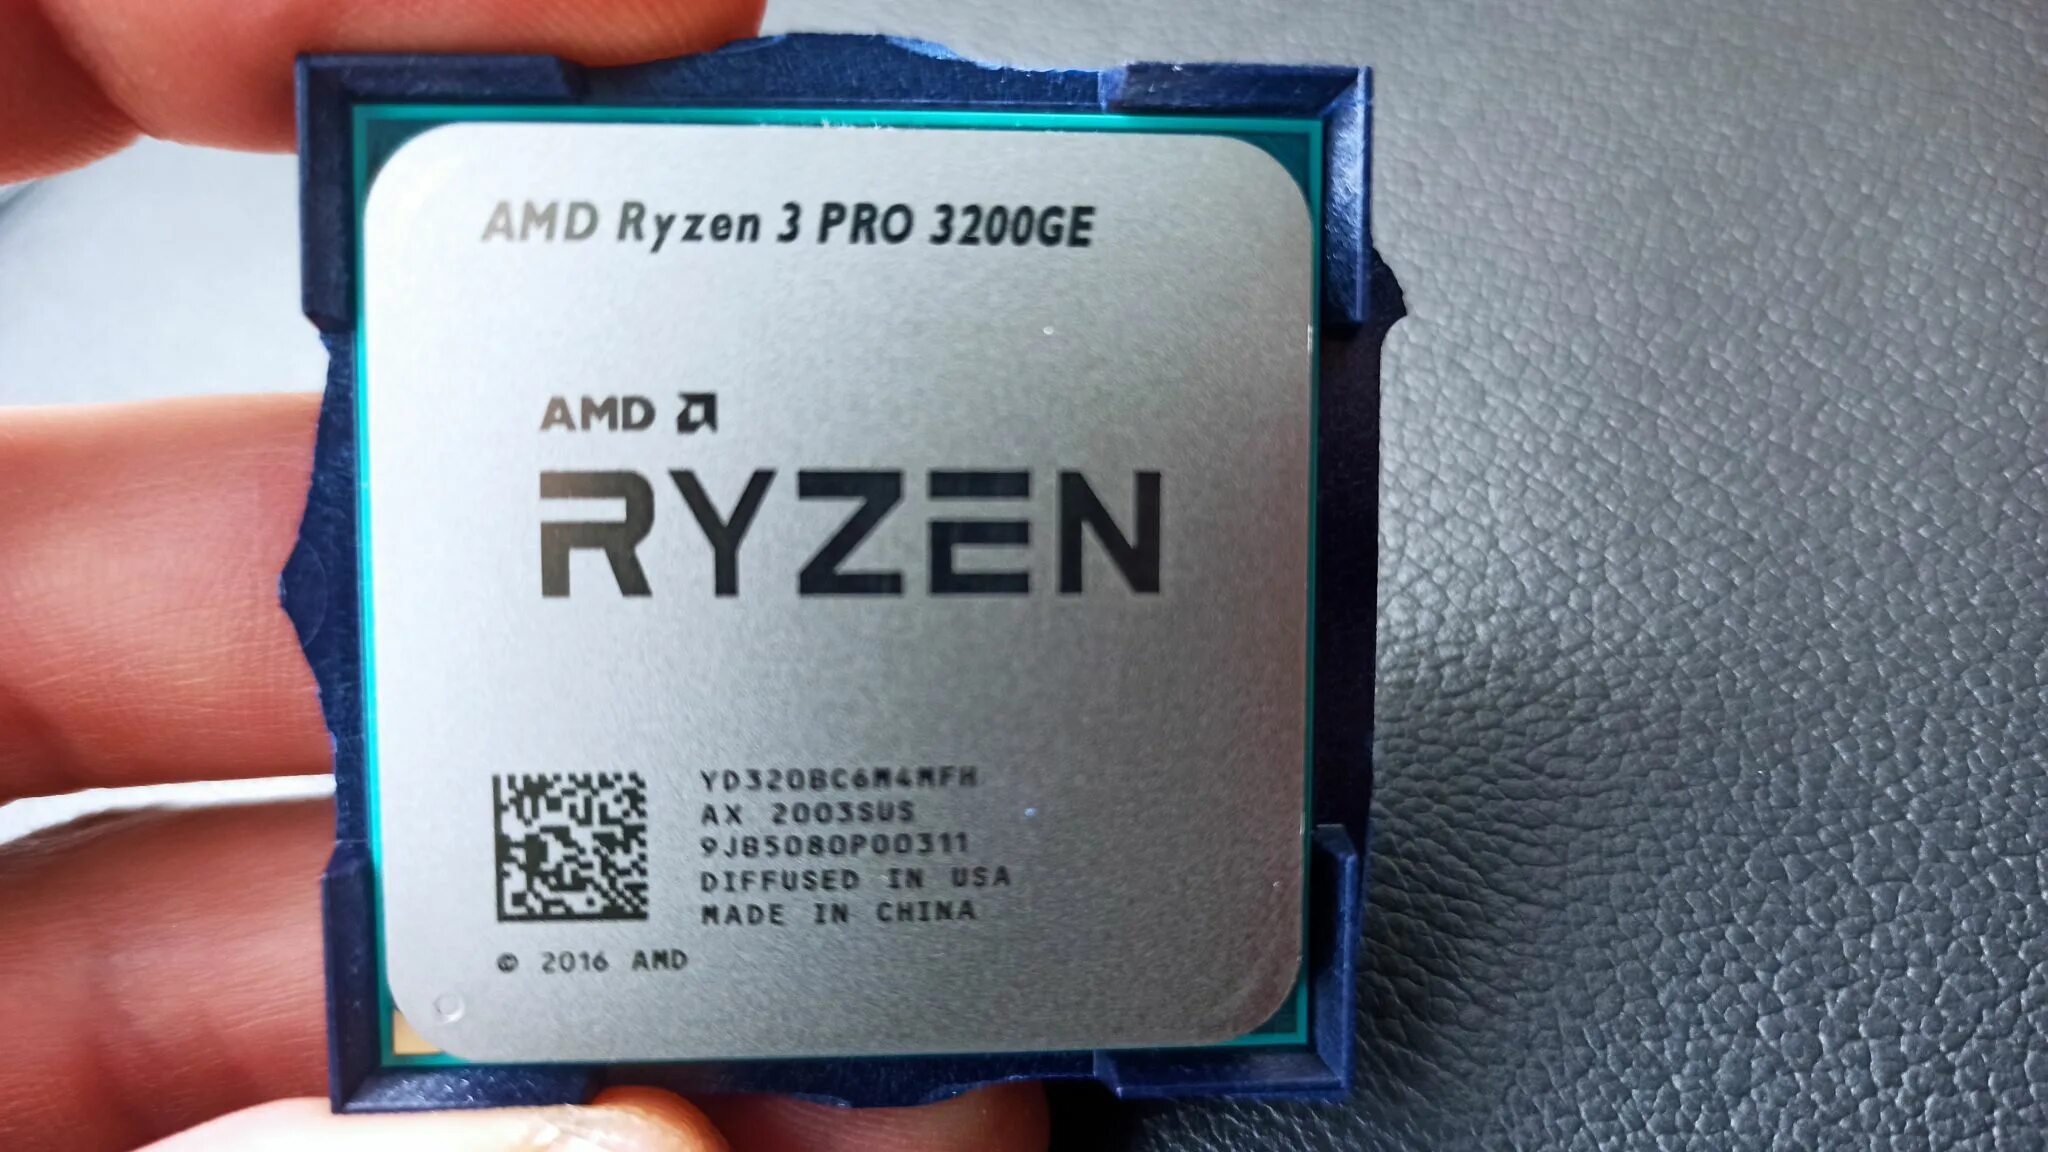 Процессор AMD Ryzen 3 Pro 2100ge OEM. Процессор AMD Ryzen 3 3200g OEM. AMD Ryzen 3 Pro 3200g. Процессор AMD Ryzen 3 3200g Box. Ryzen 3 pro 3200g